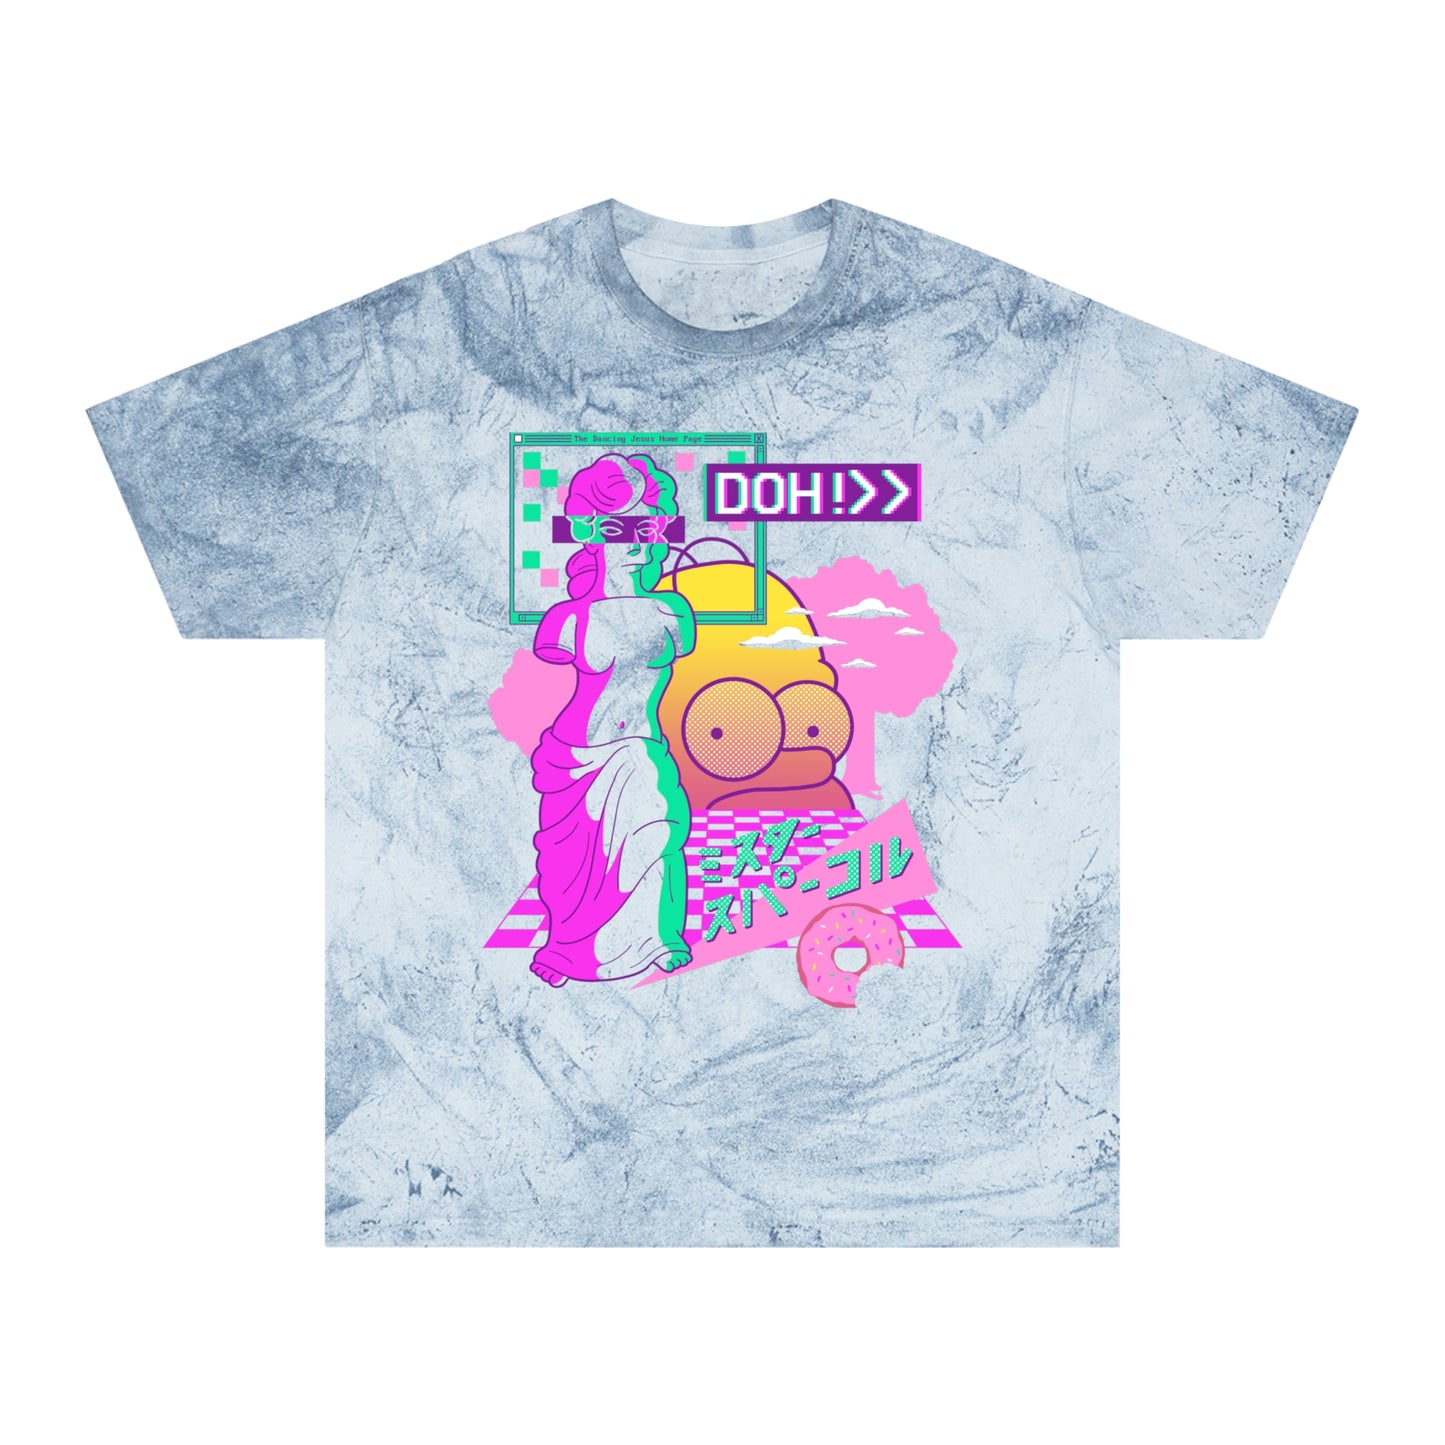 Vapor De Milo tie-dye t-shirt